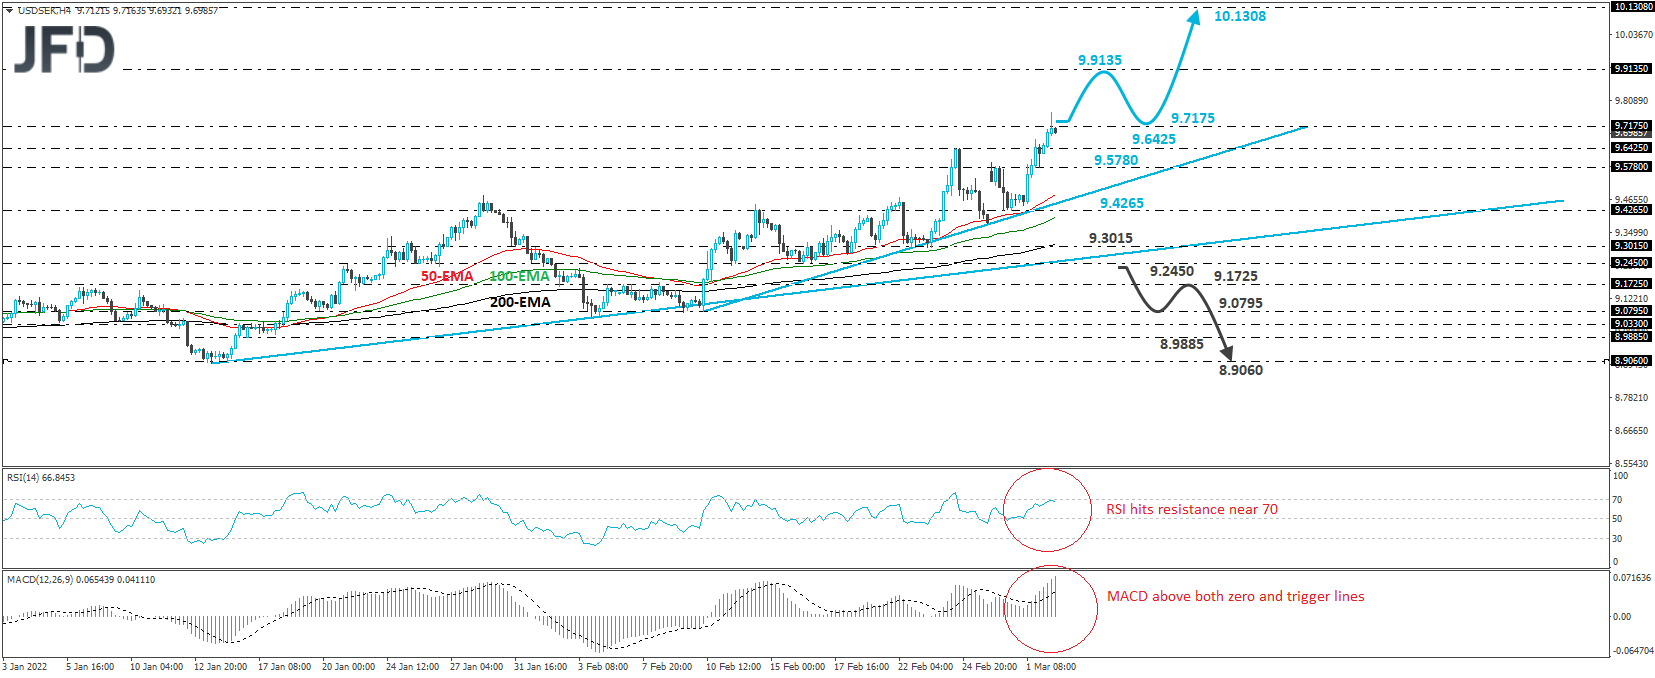 USD/SEK 4-hour chart technical analysis.